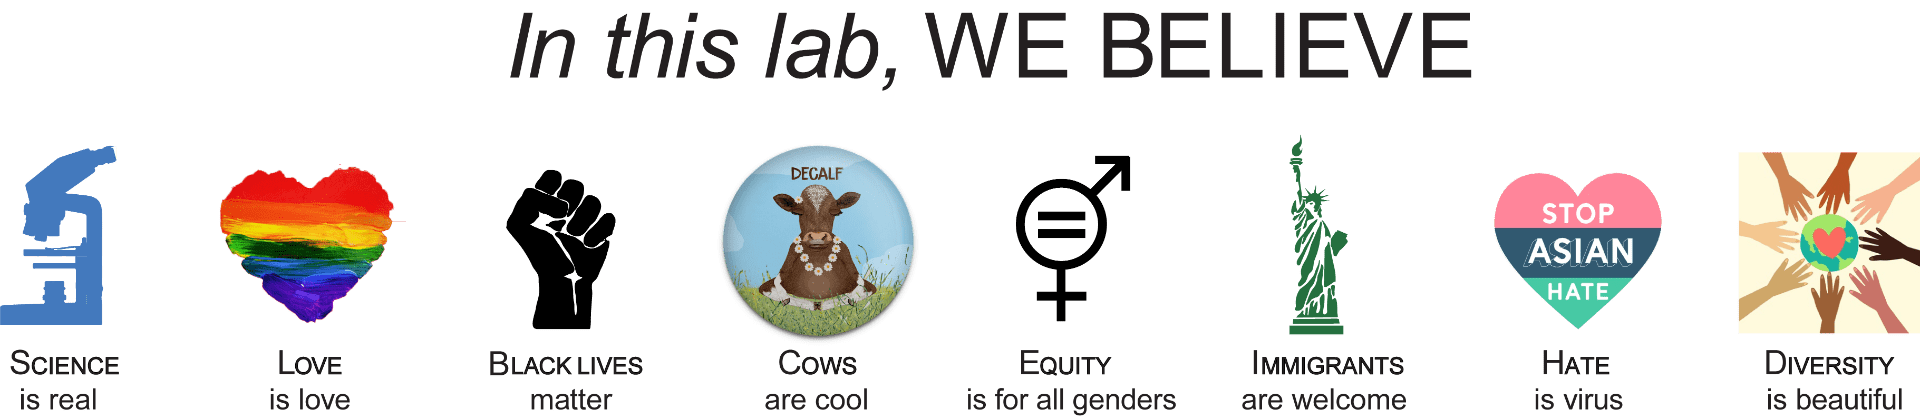 lab poster core value